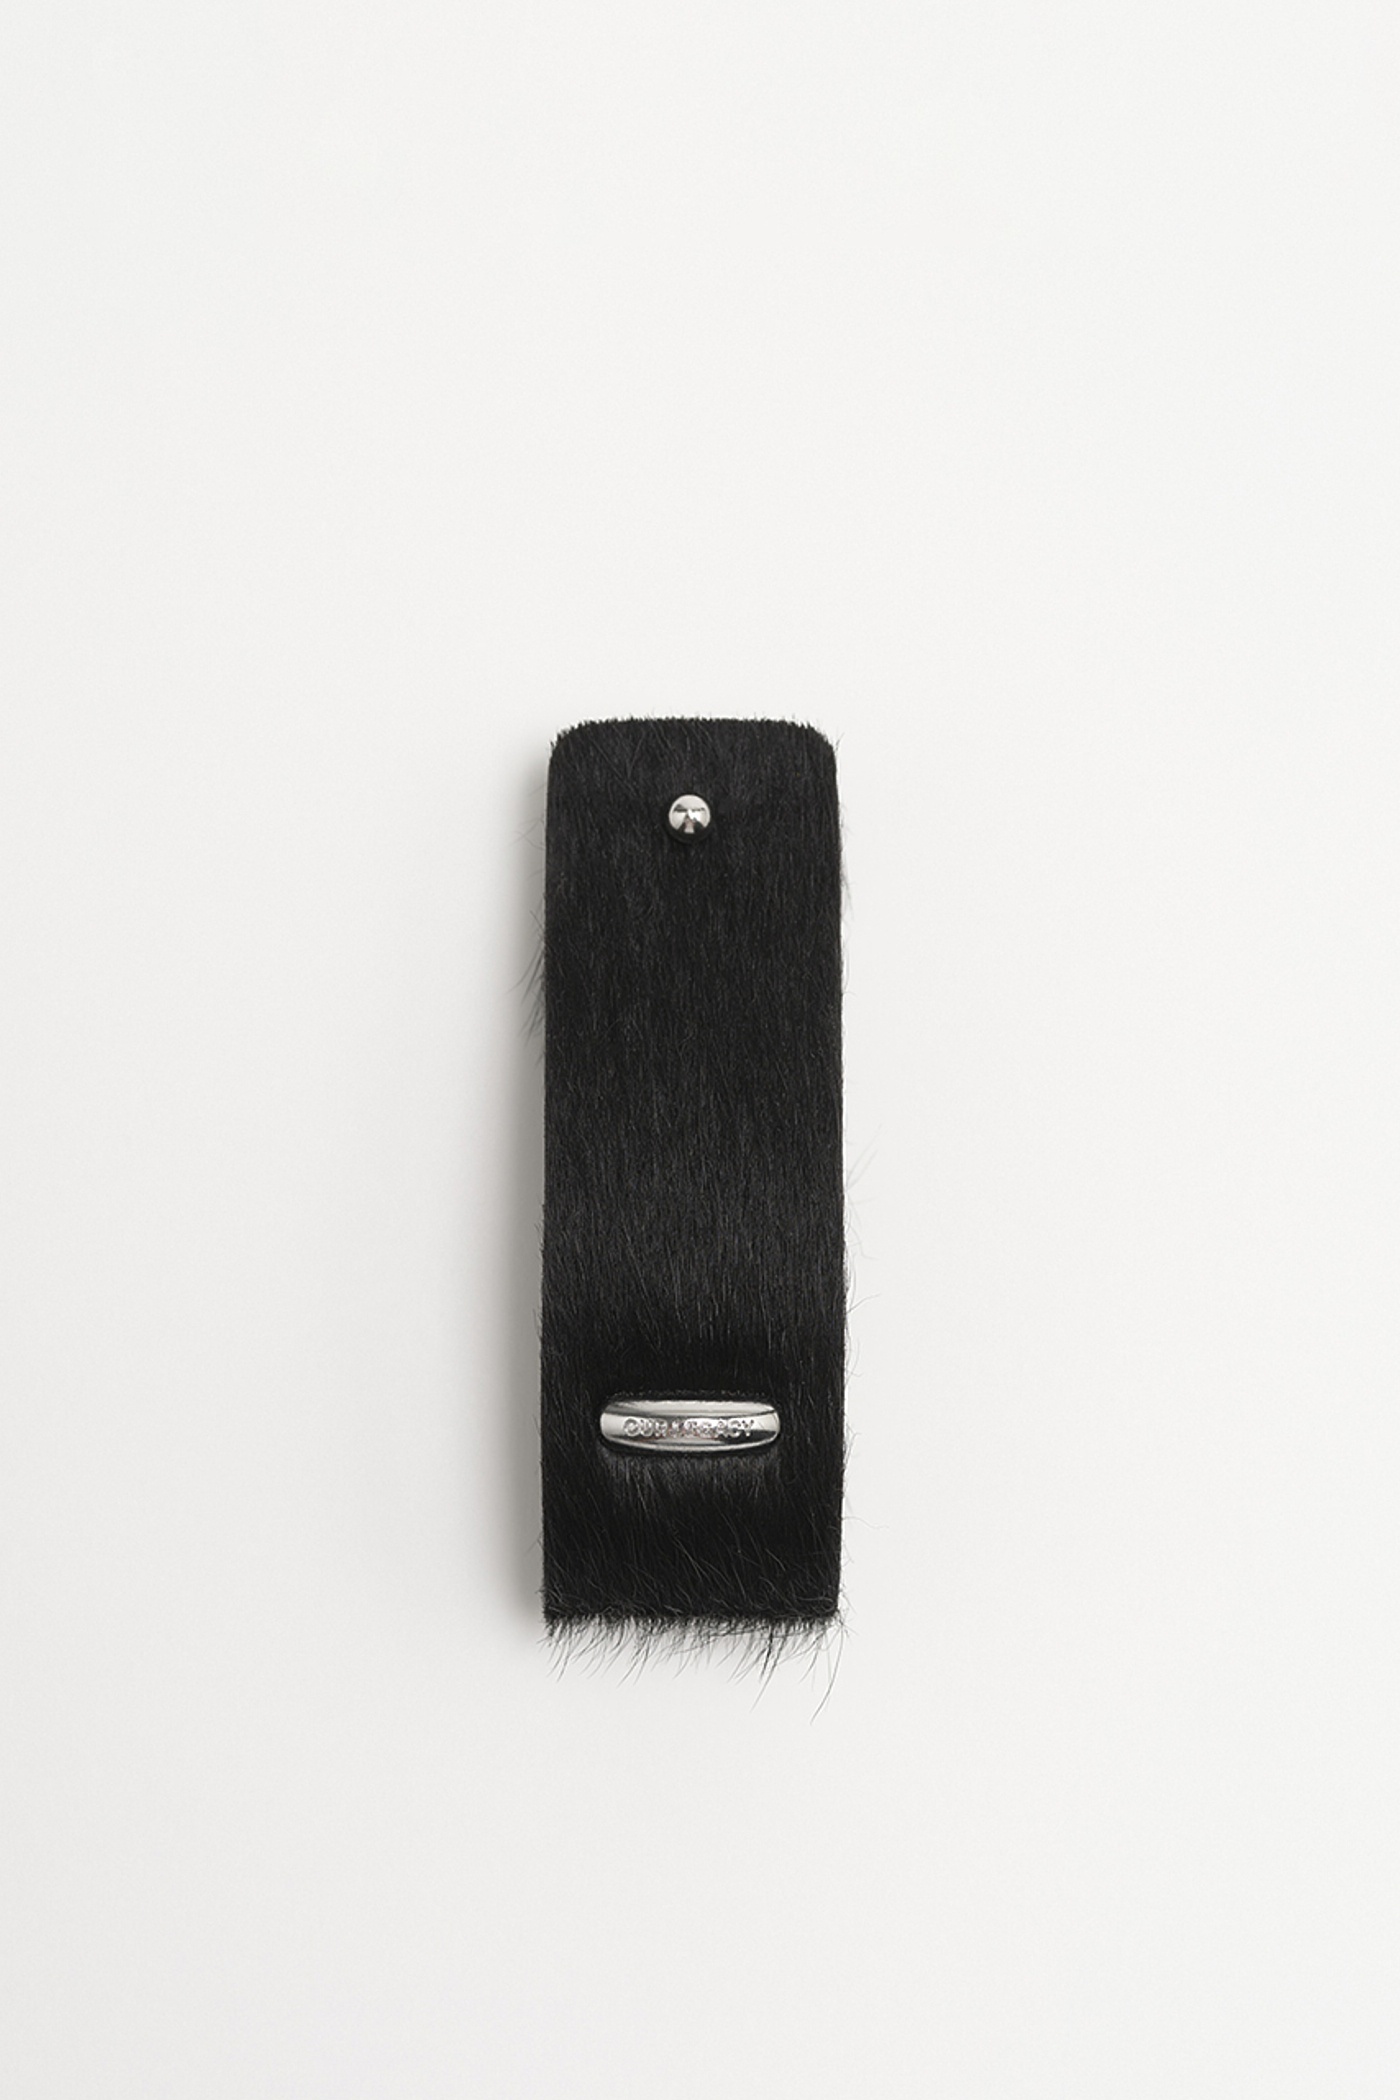 Pierced Key Holder Black Hair On Hide - 1